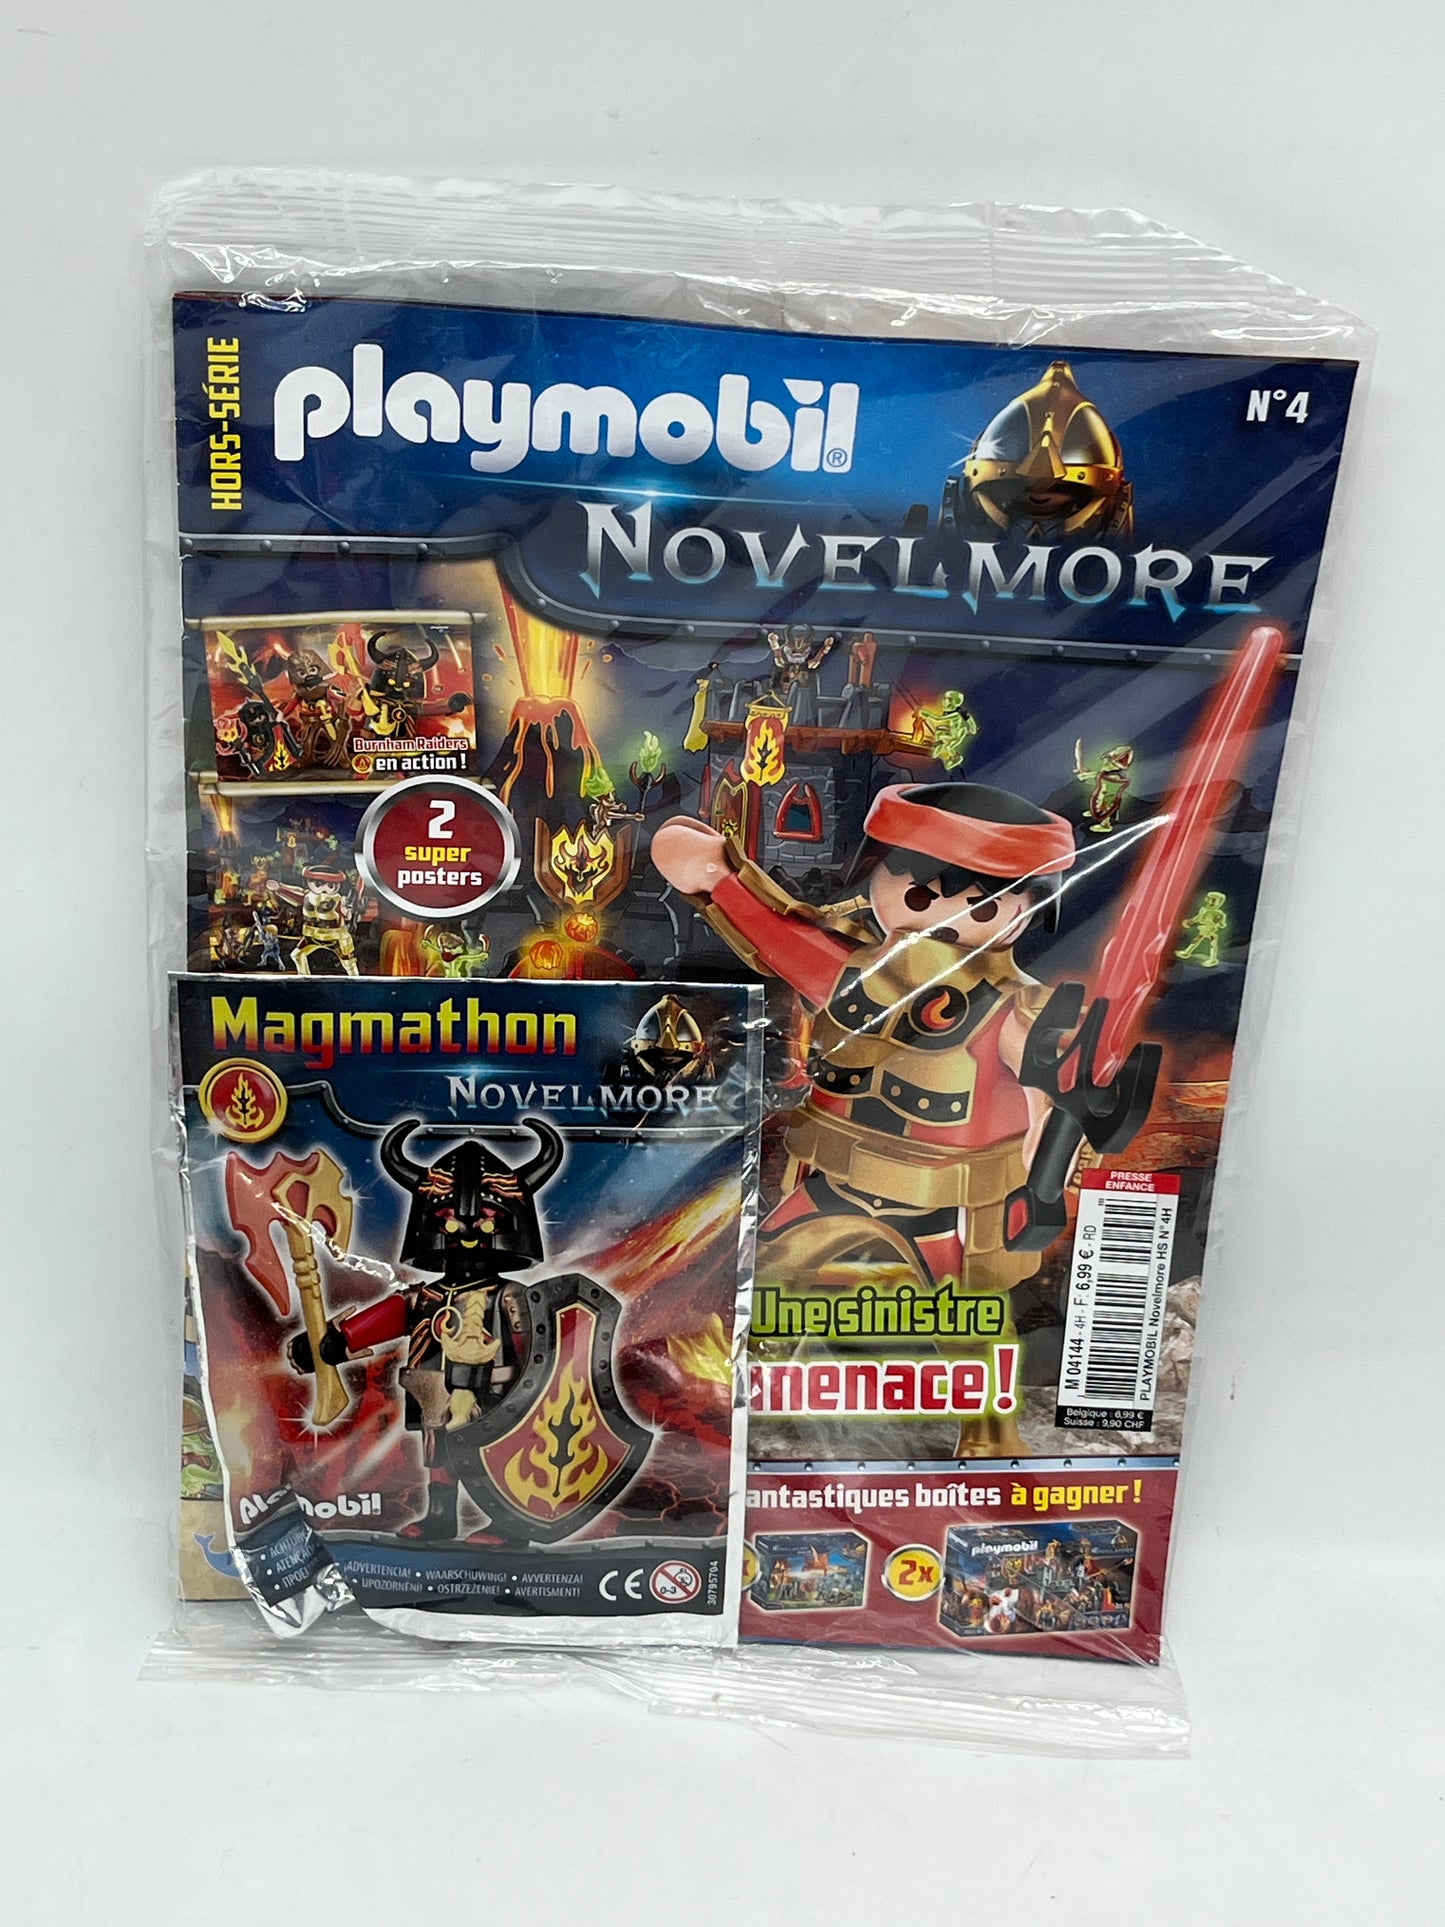 Livre D’activité magazine Playmobil Novelmore avec sa figurine chevalier  Magmathon jamais ouvert Neuf